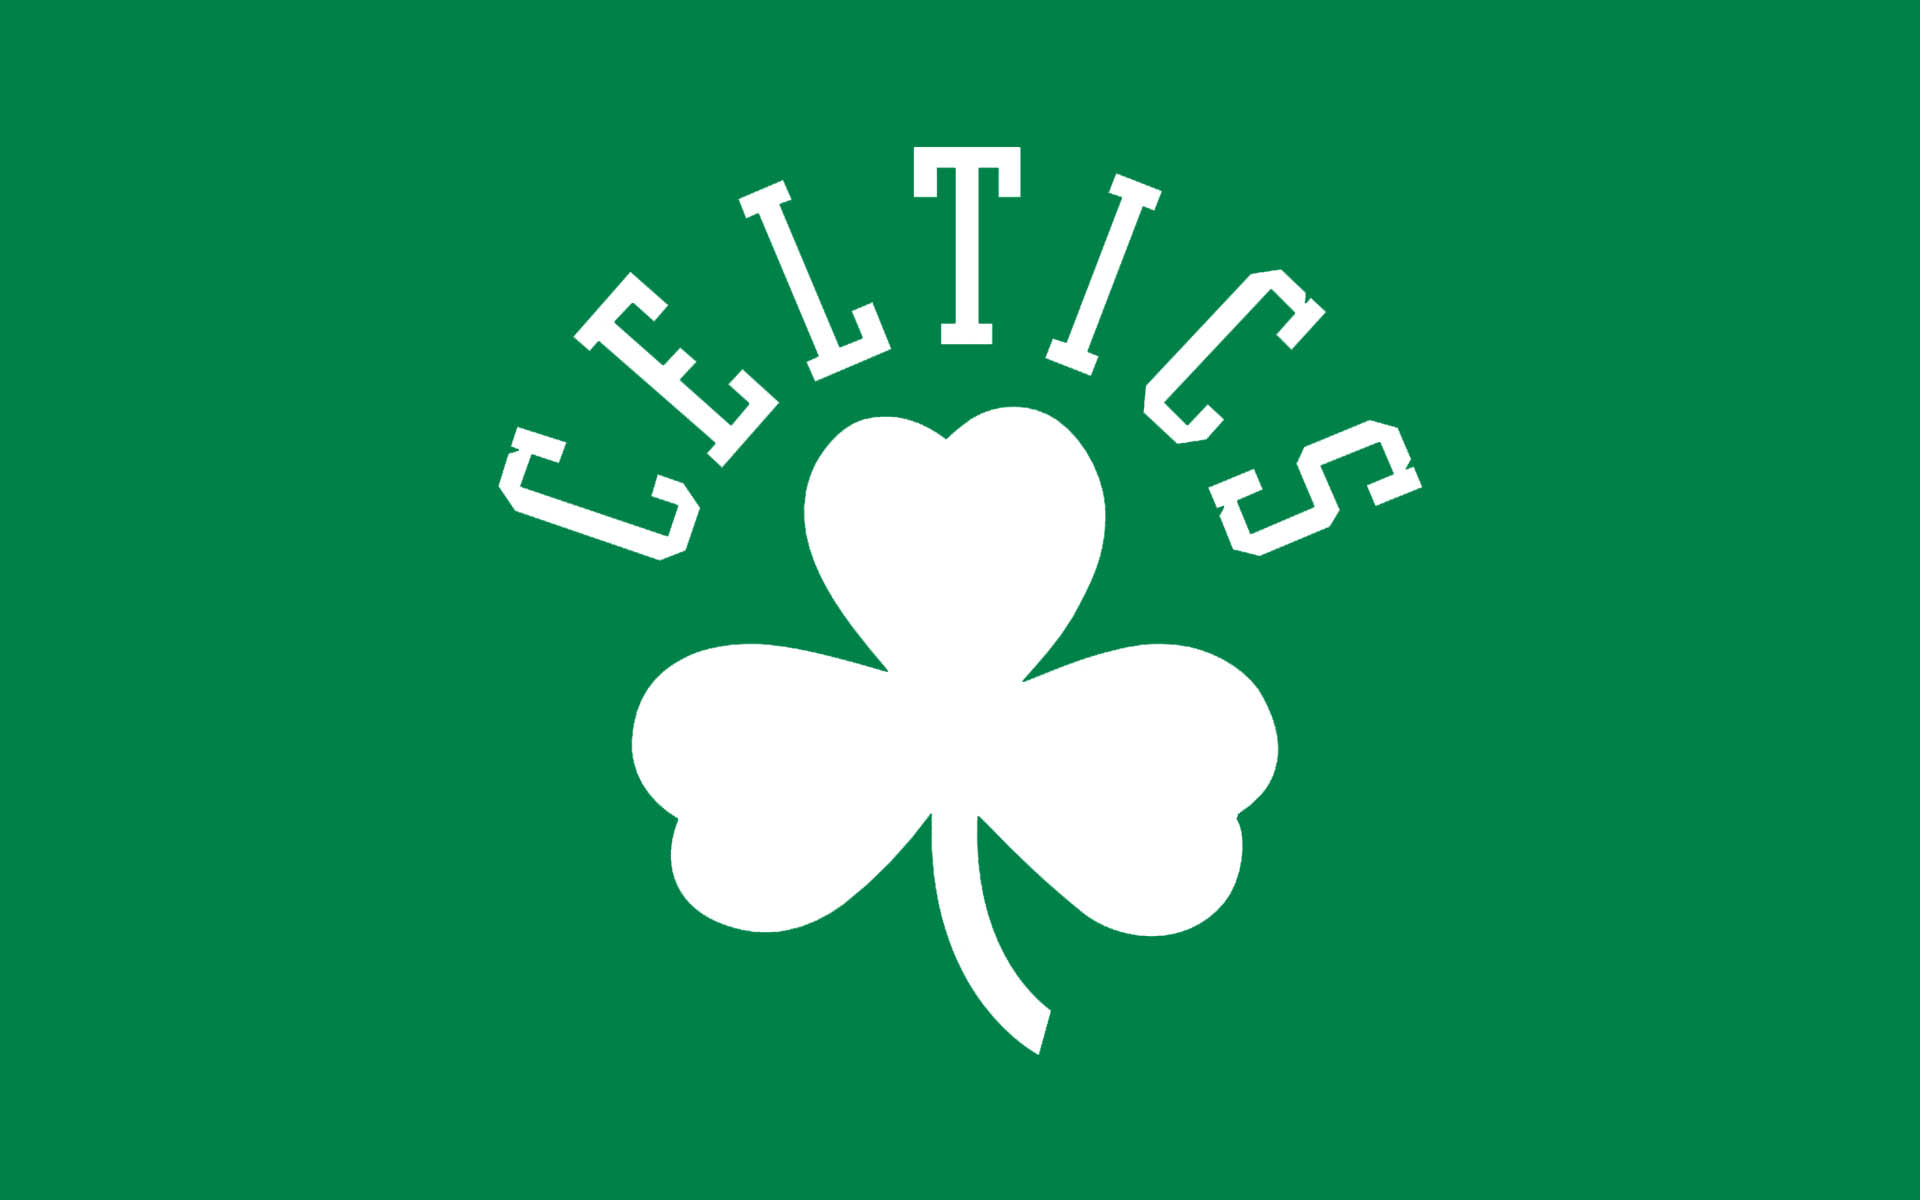 Boston Celtics Wallpapers - Top Free Boston Celtics Backgrounds -  WallpaperAccess